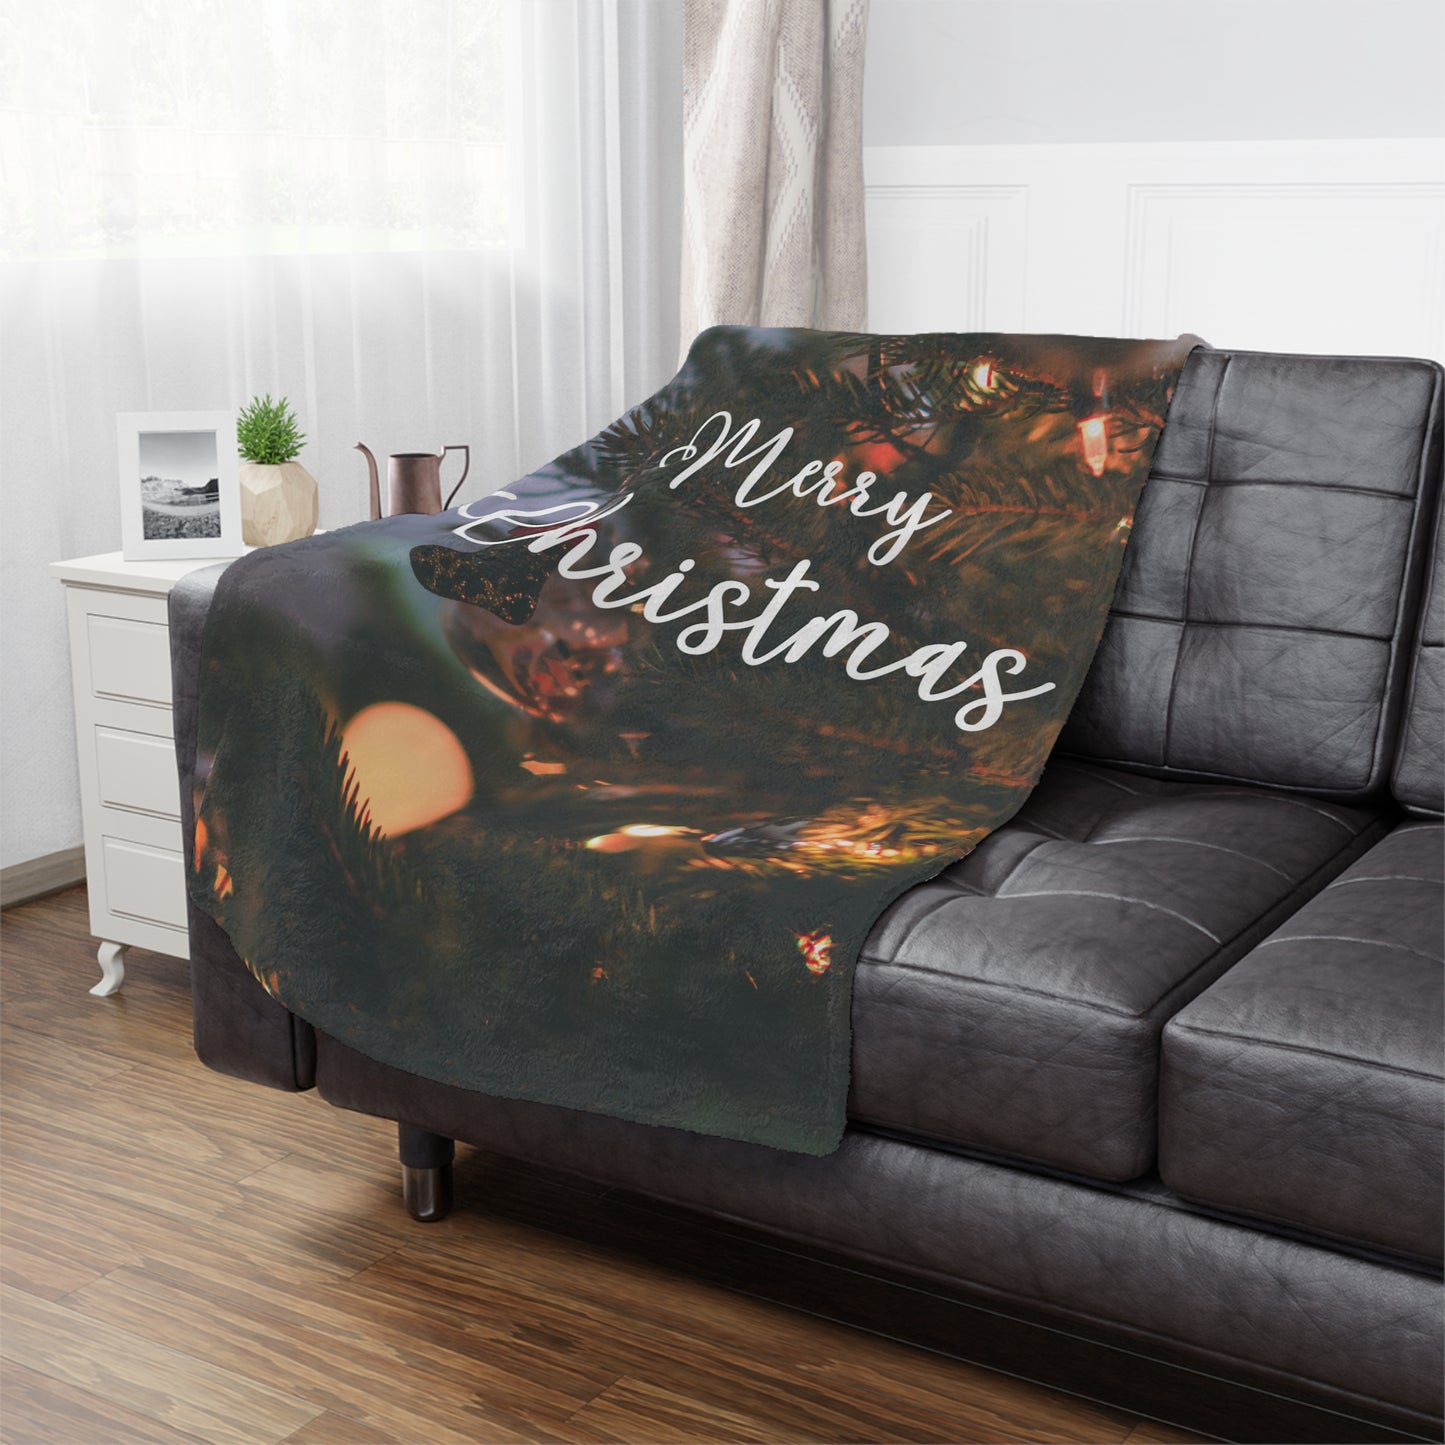 Merry Christmas with Ornament Printed Velveteen Minky Blanket